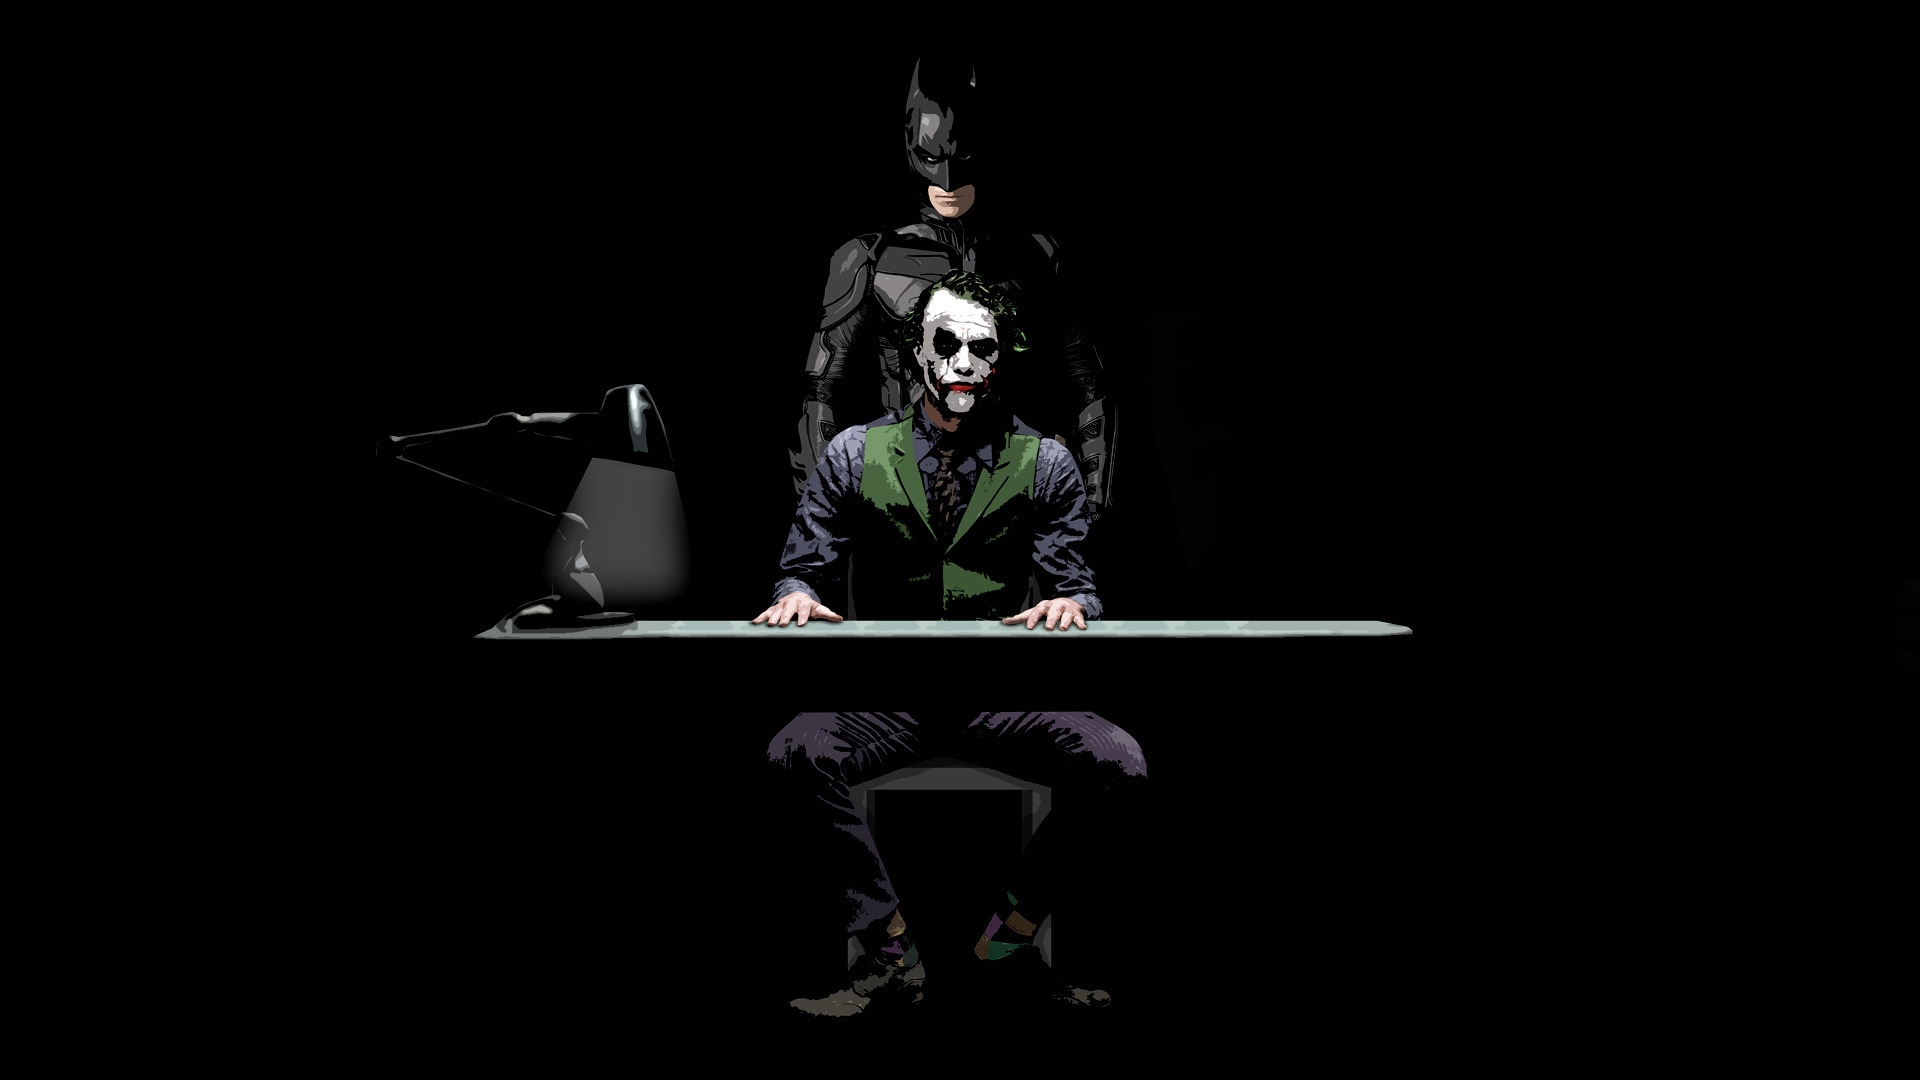 Batman and Joker Sketch for 1920 x 1080 HDTV 1080p resolution